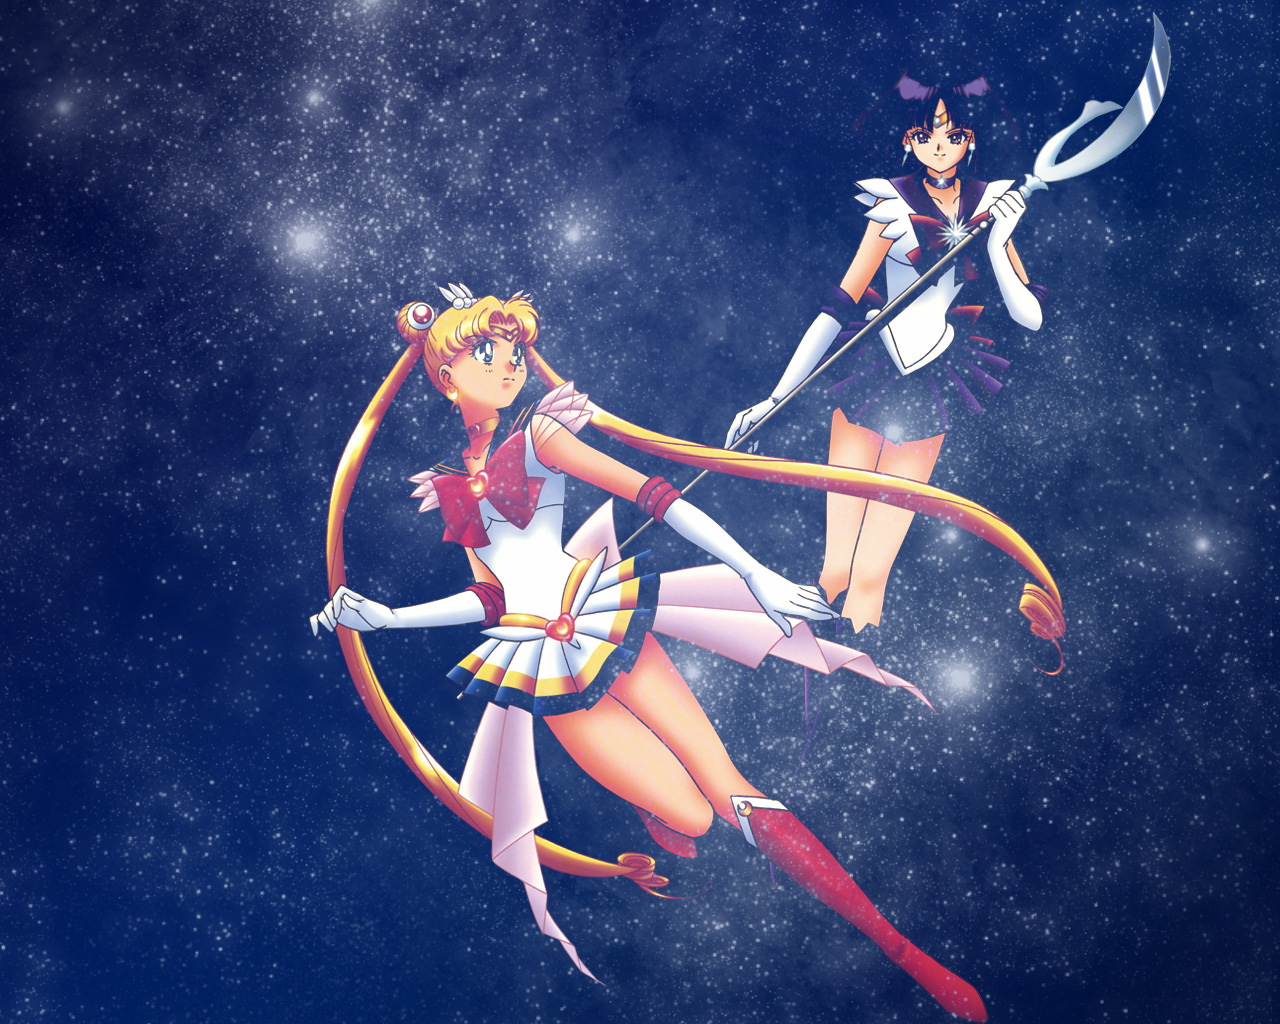 Sailor moon myers briggs